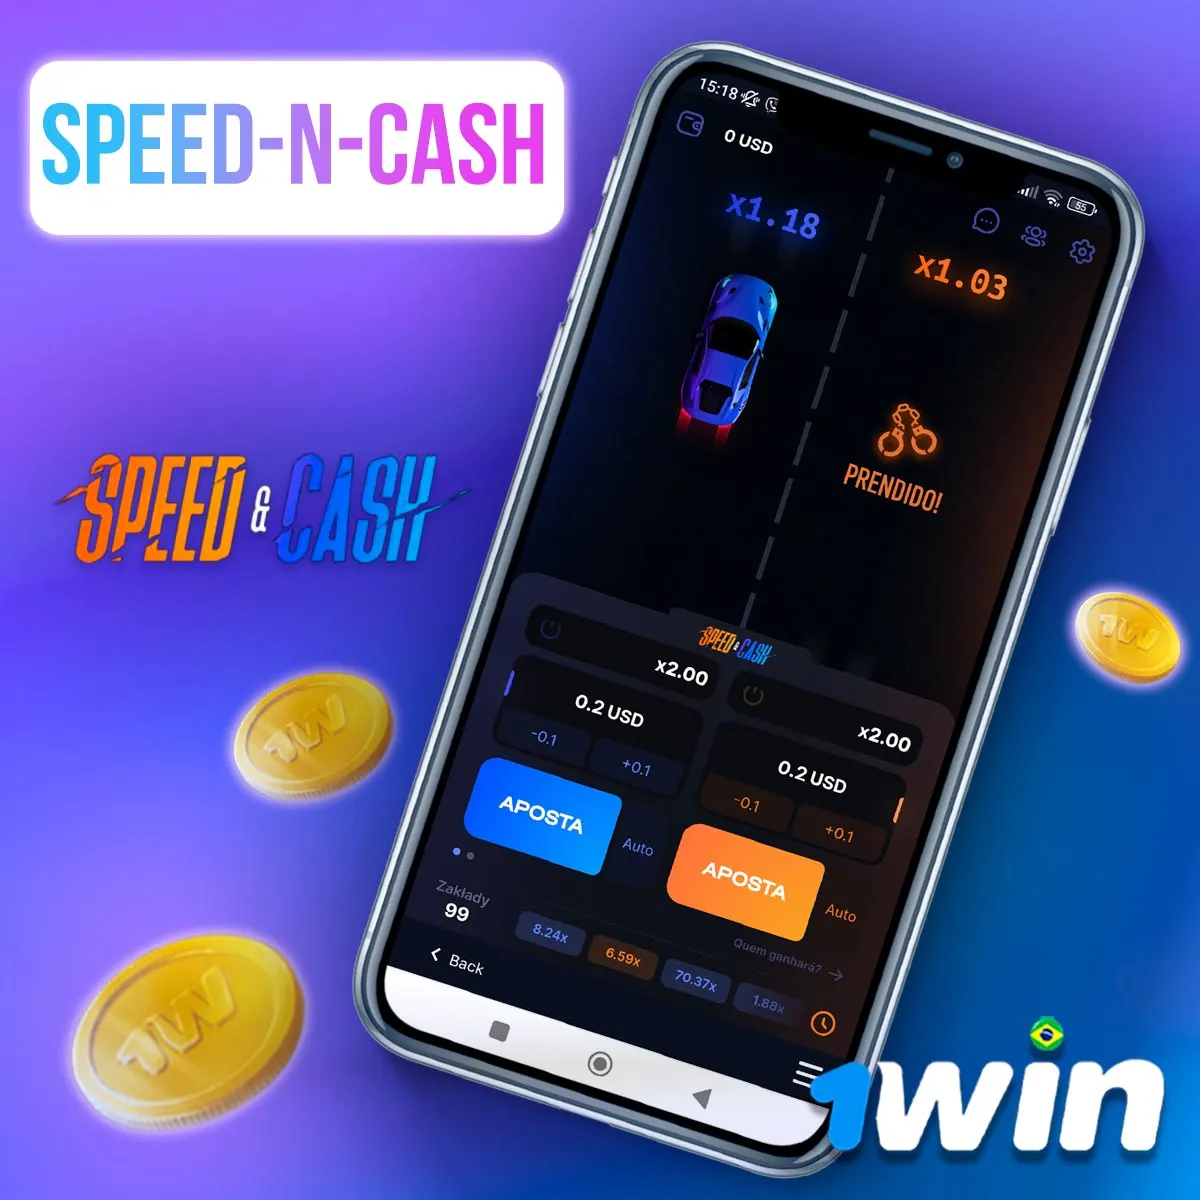 Popular jogo de cassino Speed-n-cash na casa de apostas 1win no mercado brasileiro